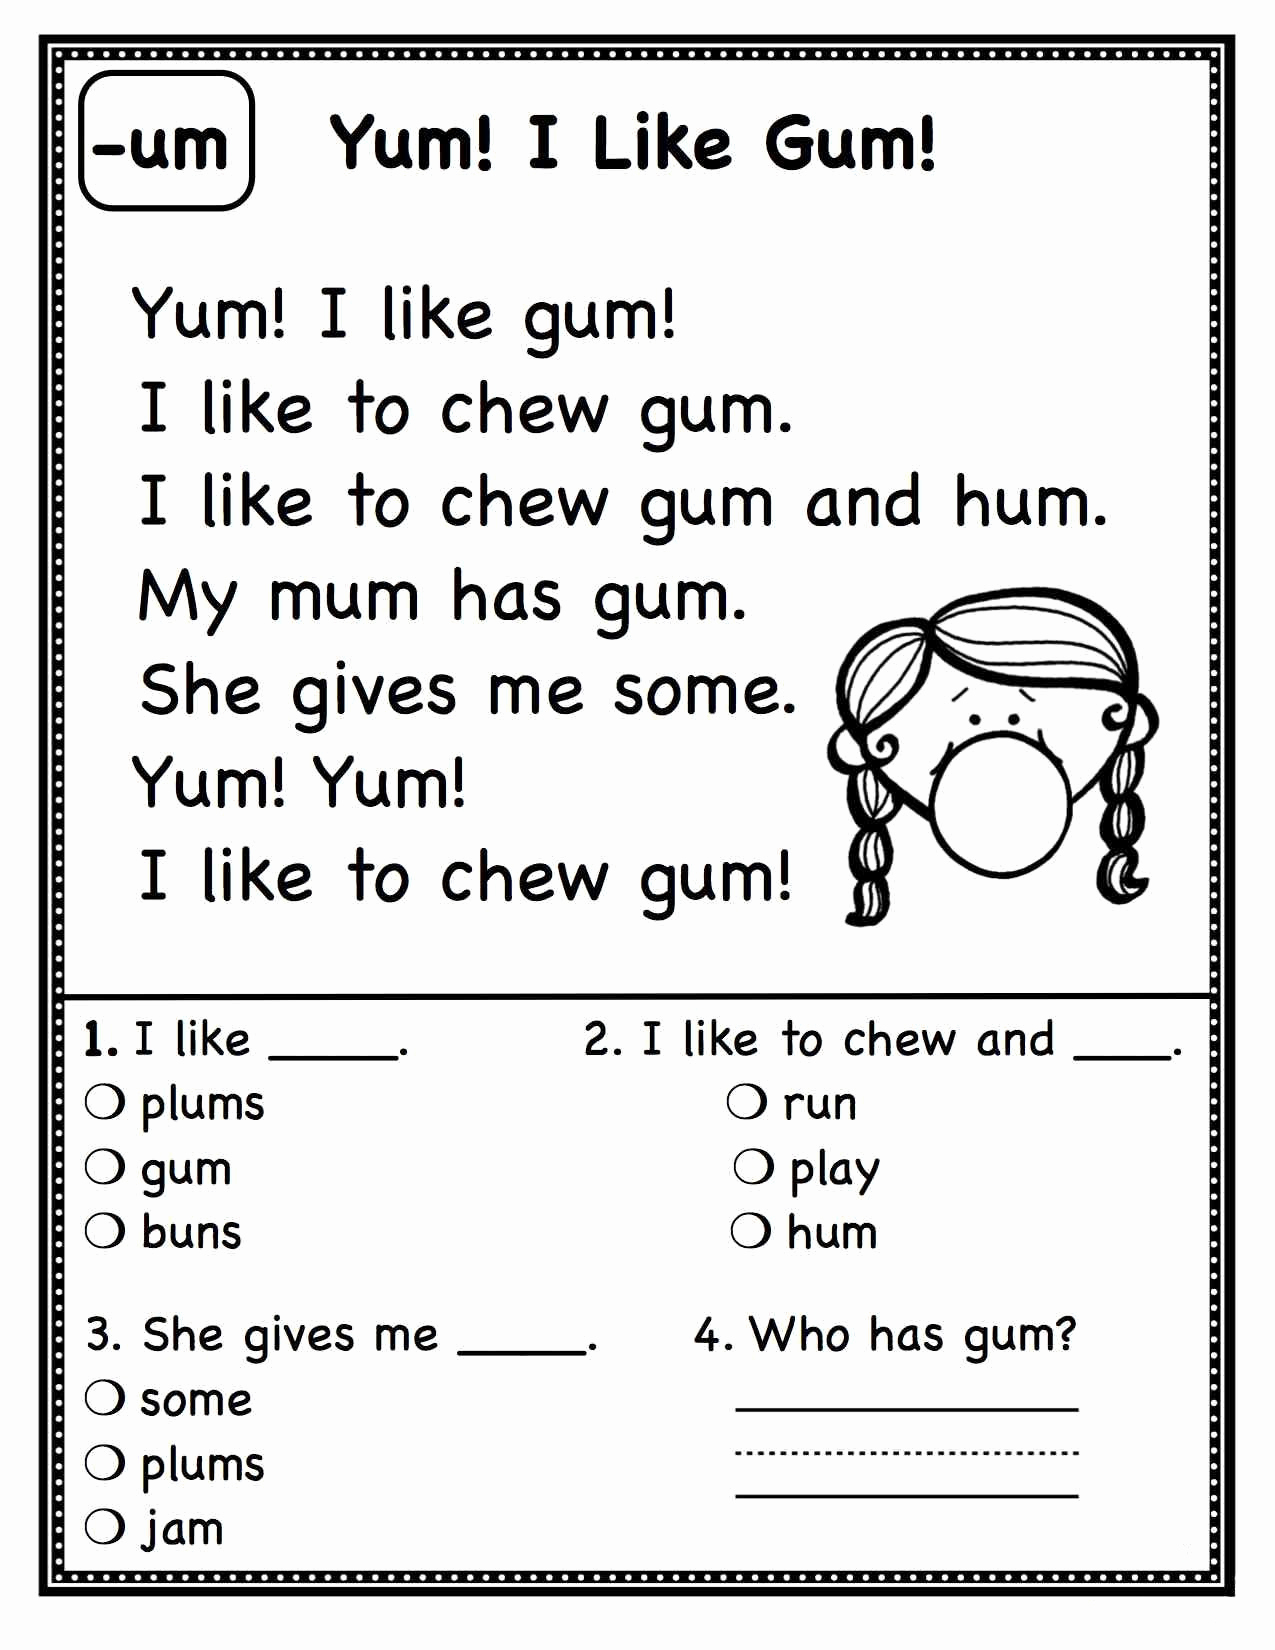 Grammar Worksheet First Grade Inspirational 1st Grade English Worksheets Best Coloring Pages for Kids